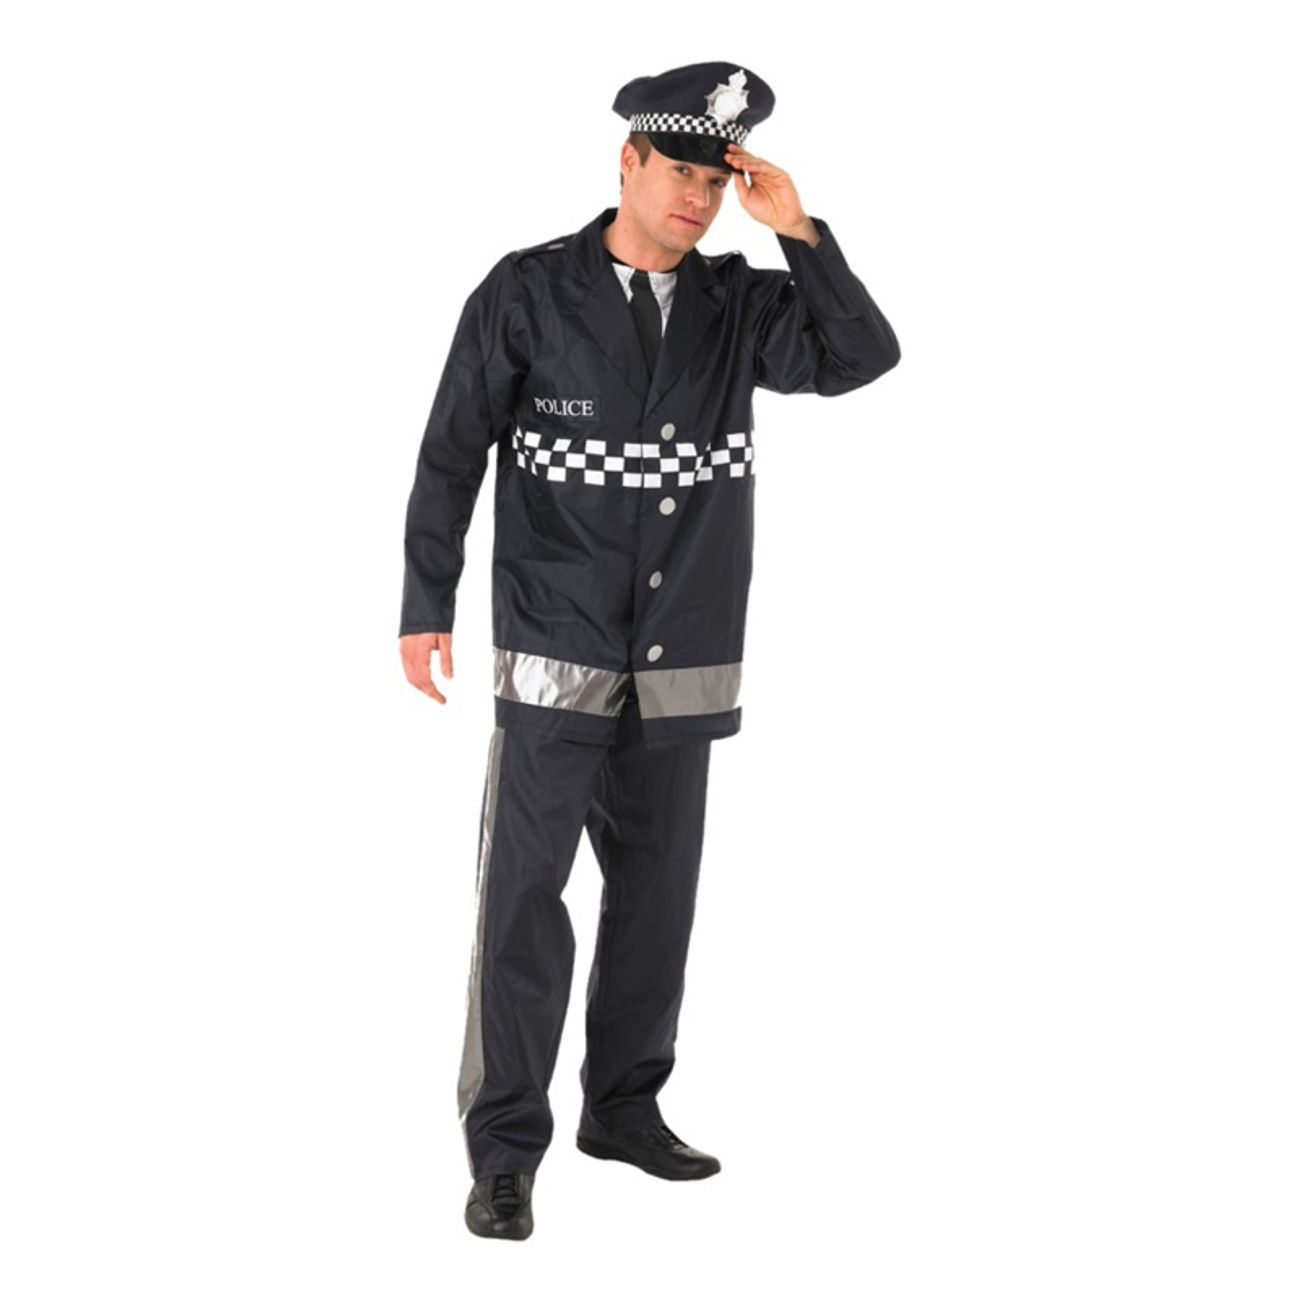 brittisk-polisman-maskeraddrakt-1